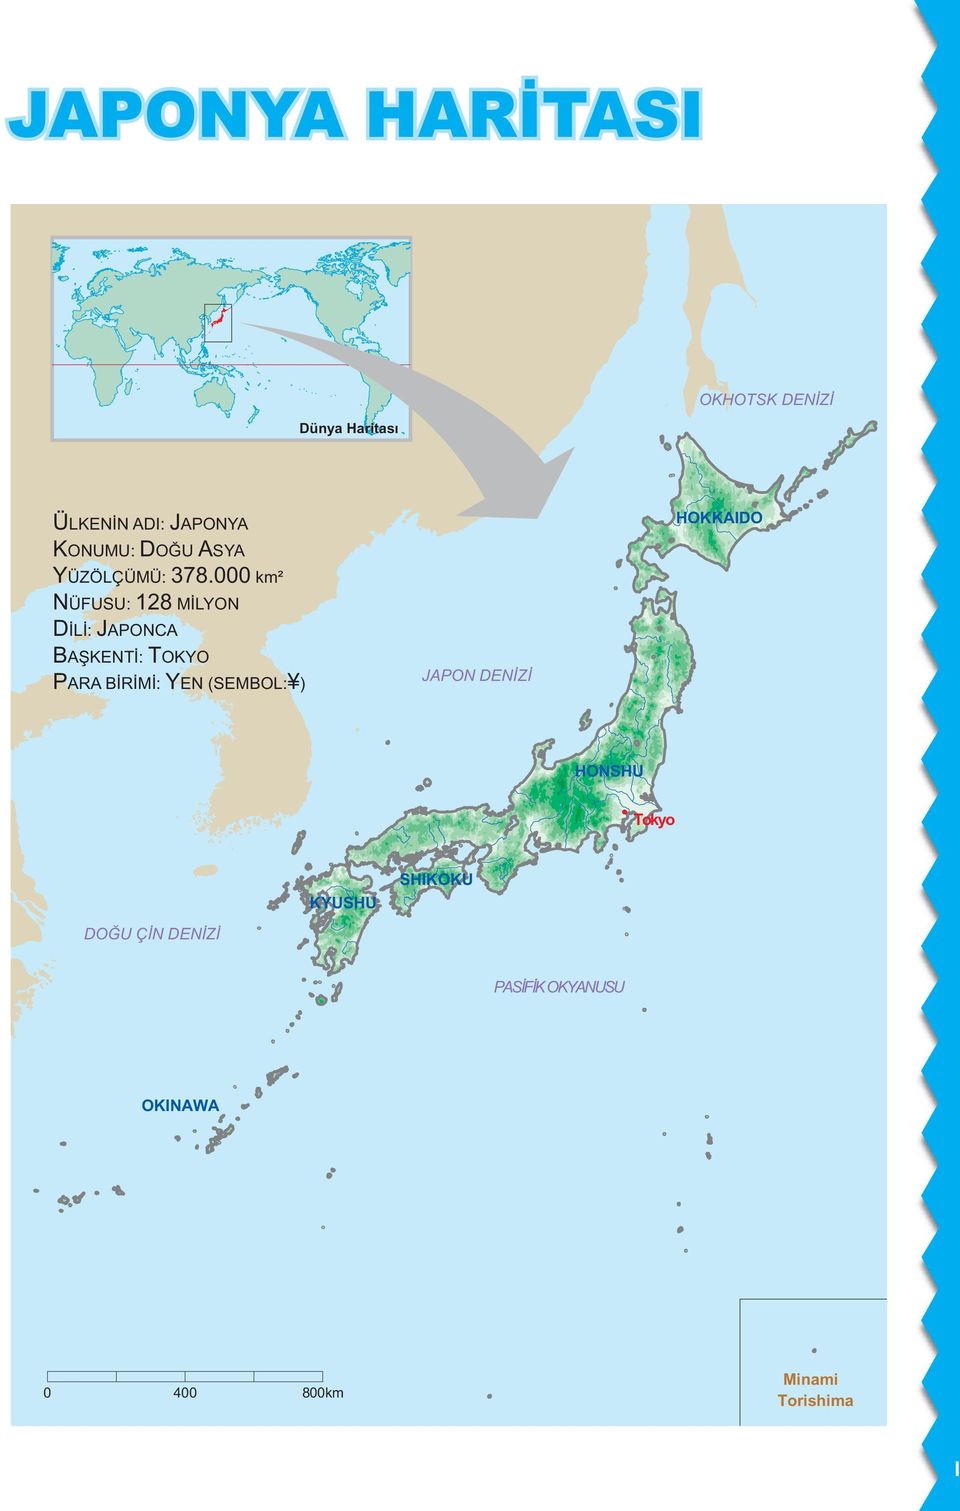 000 km² NÜFUSU: 128 MİLYON DİLİ: JAPONCA BAŞKENTİ: TOKYO PARA BİRİMİ: YEN